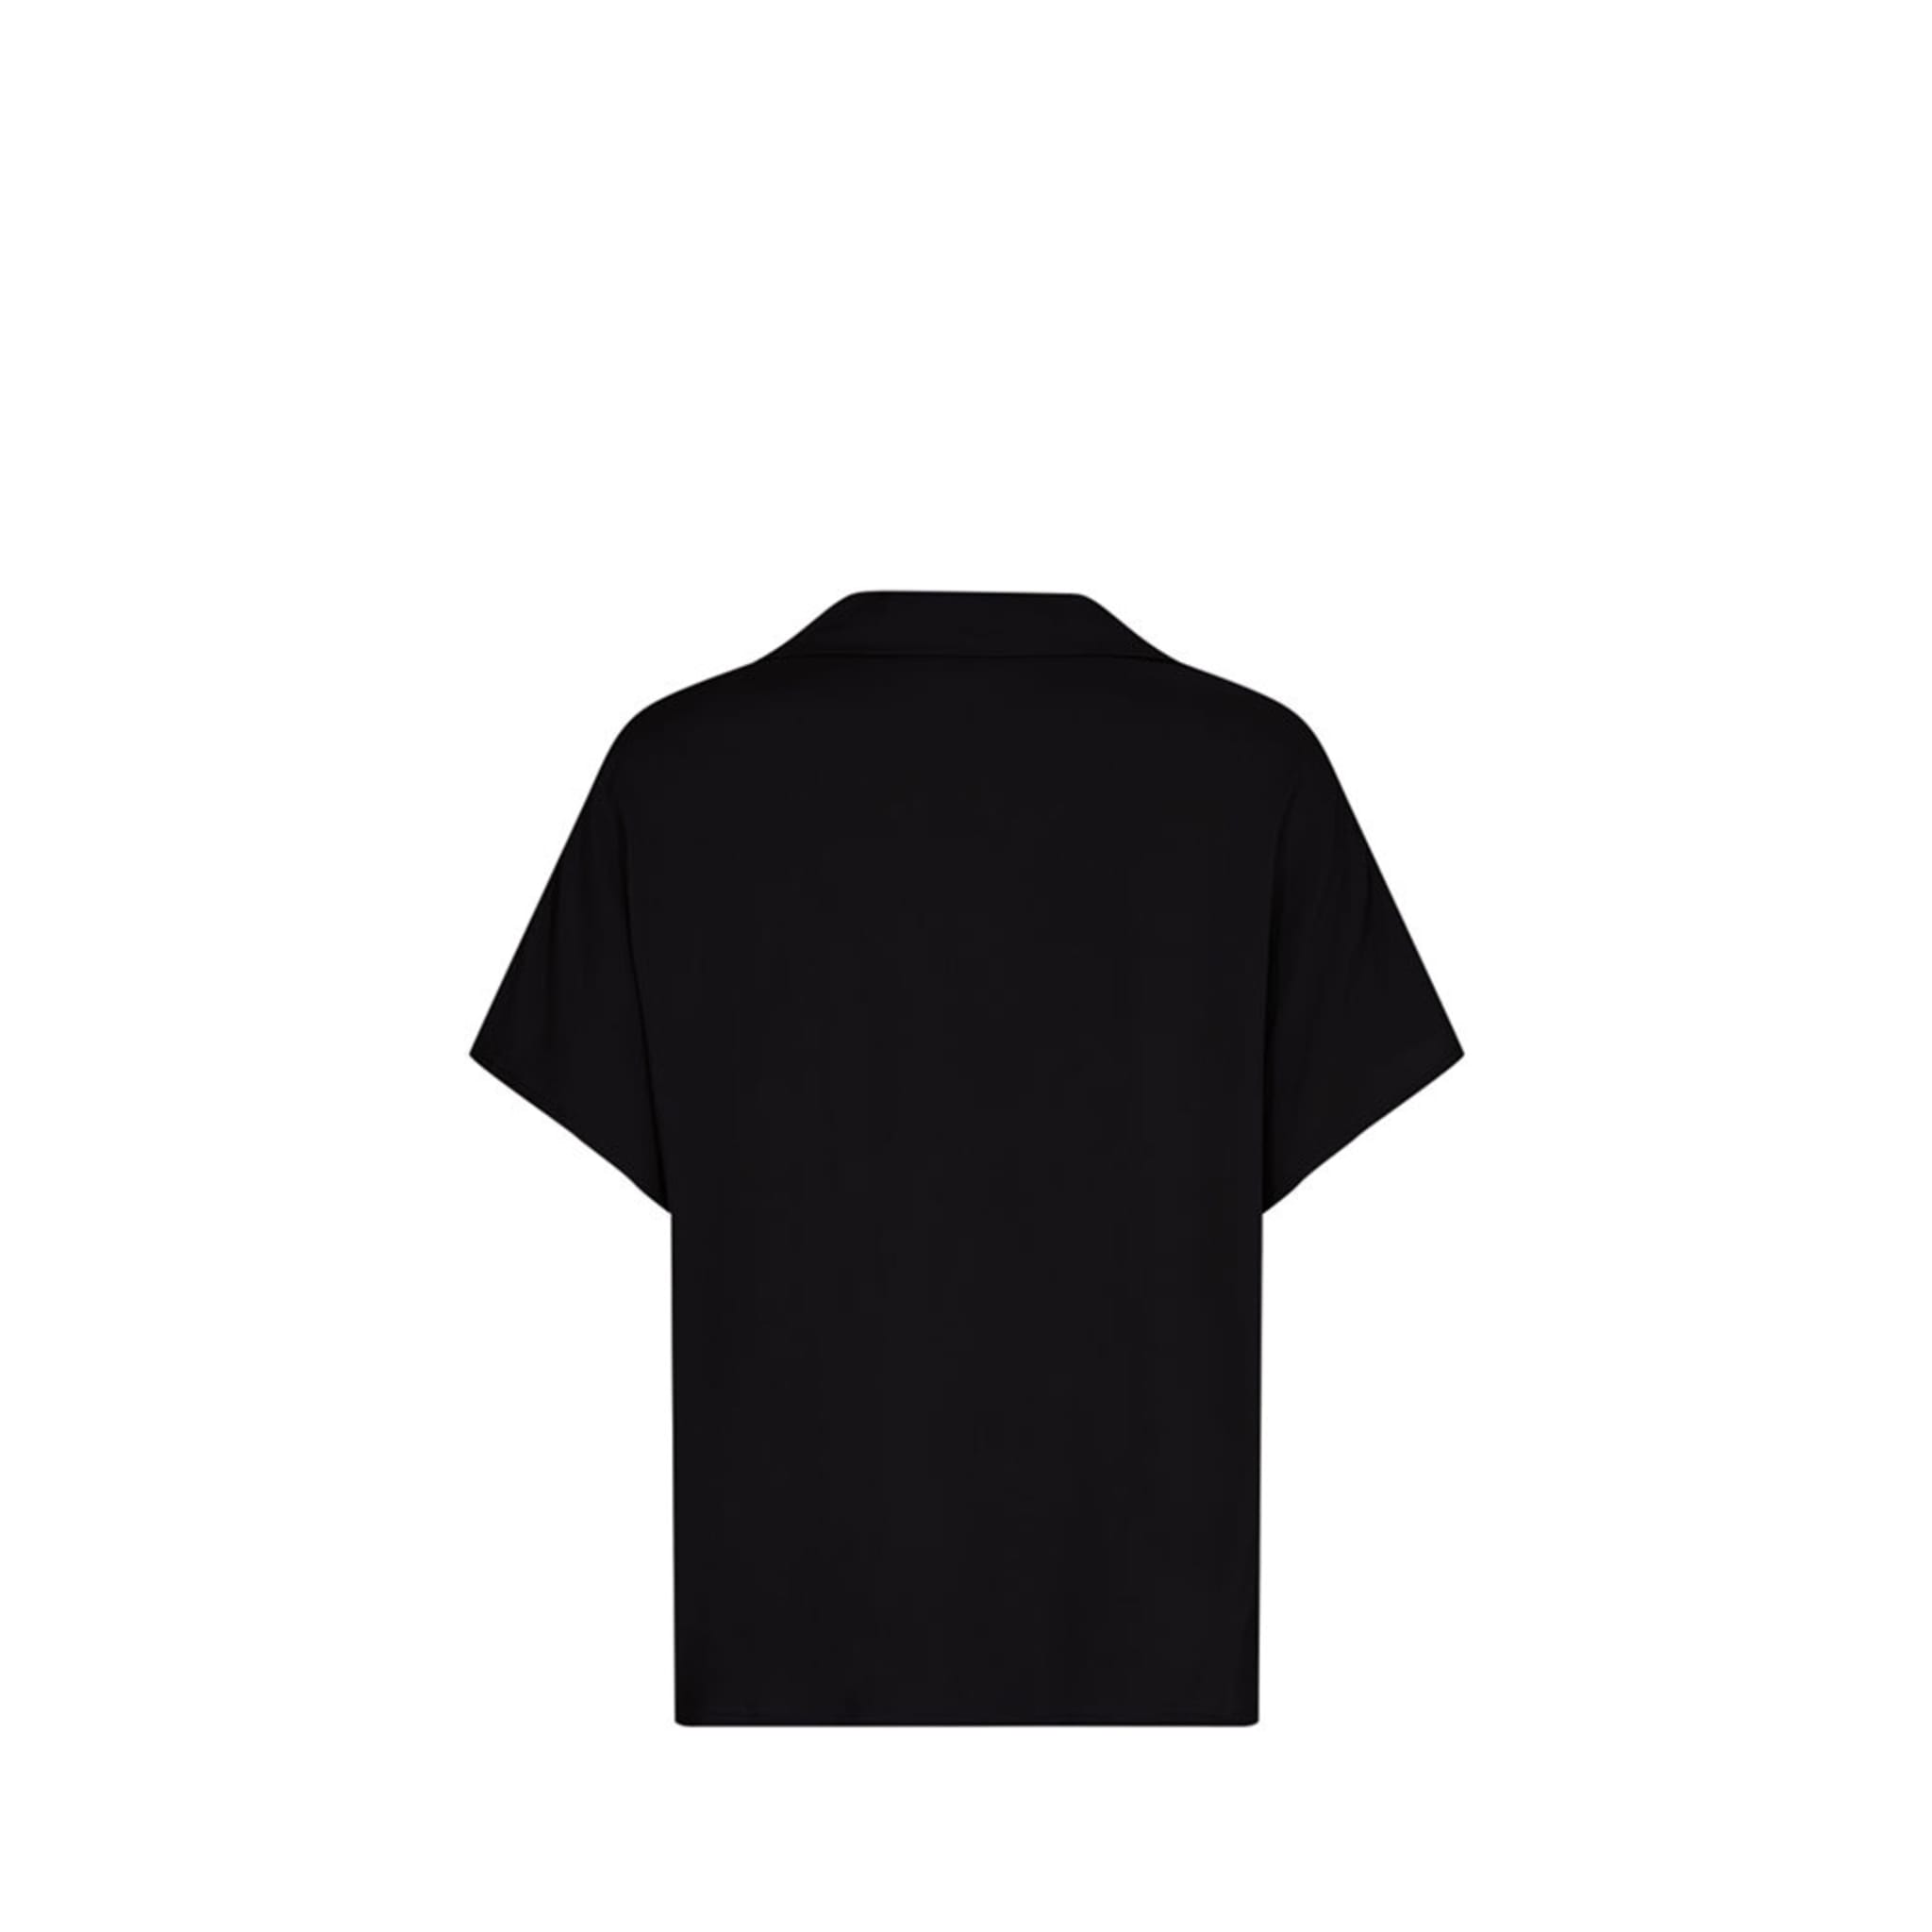 SC-Radia 127 Shirt, Black